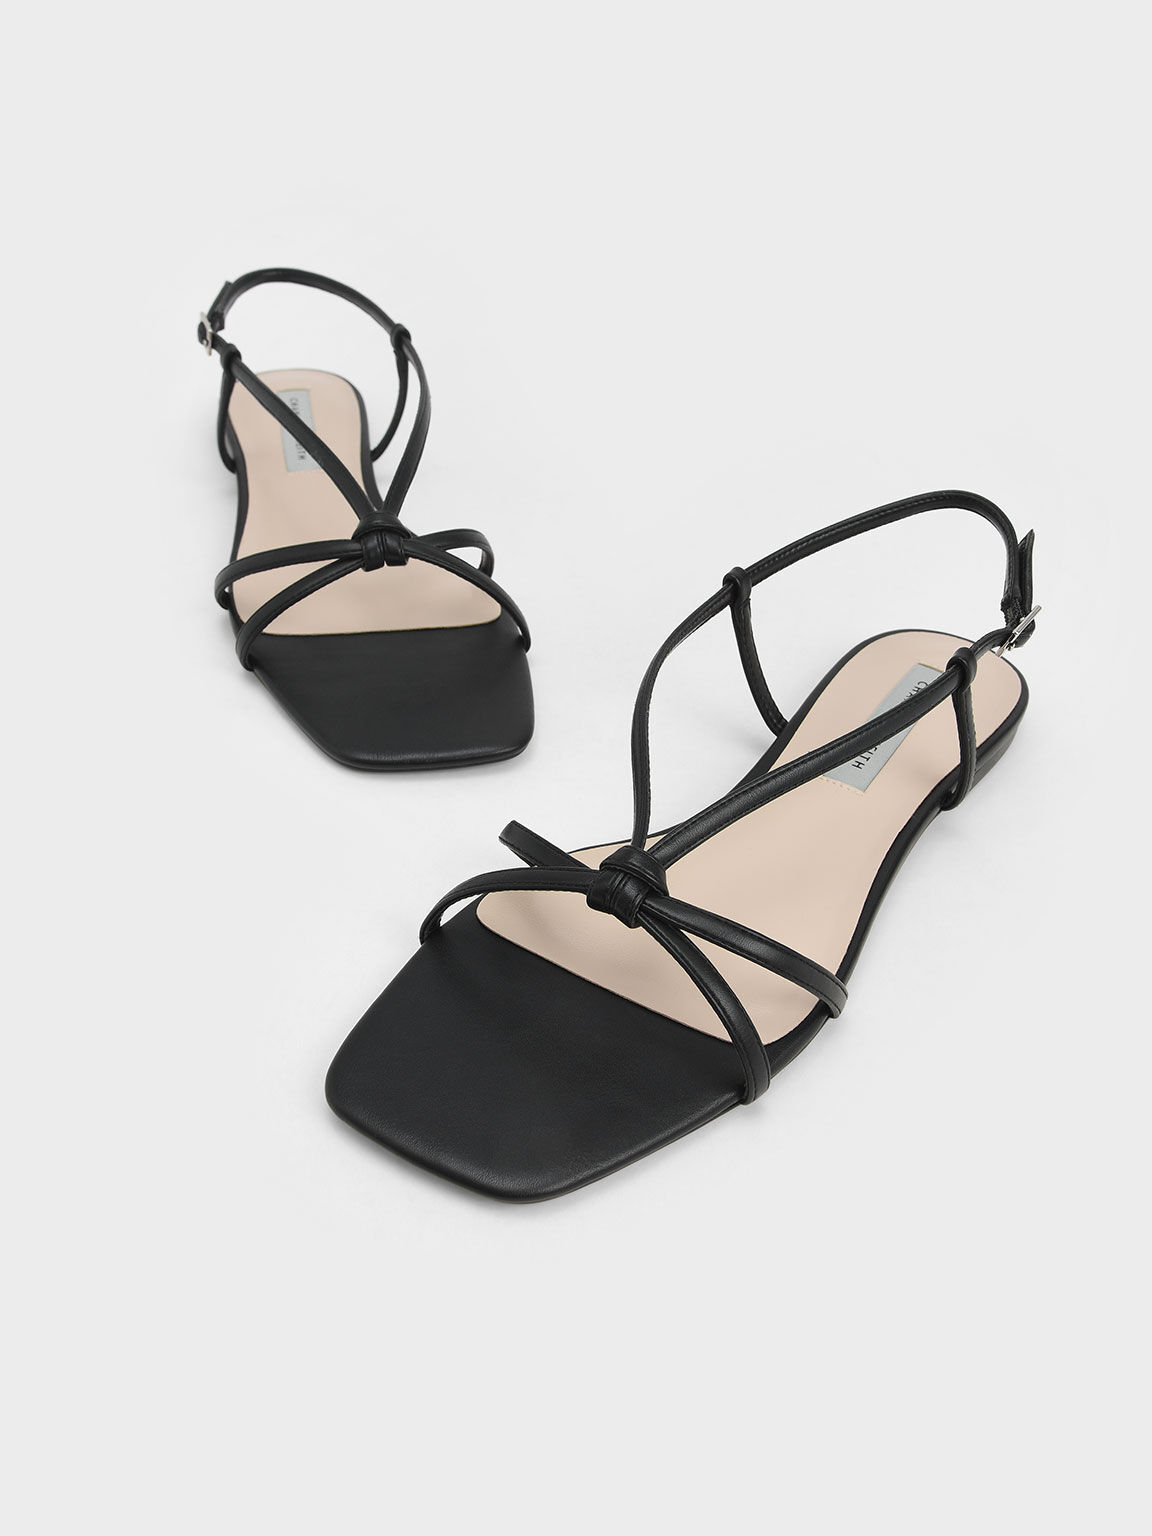 Strappy Knotted Slingback Sandals, Black, hi-res